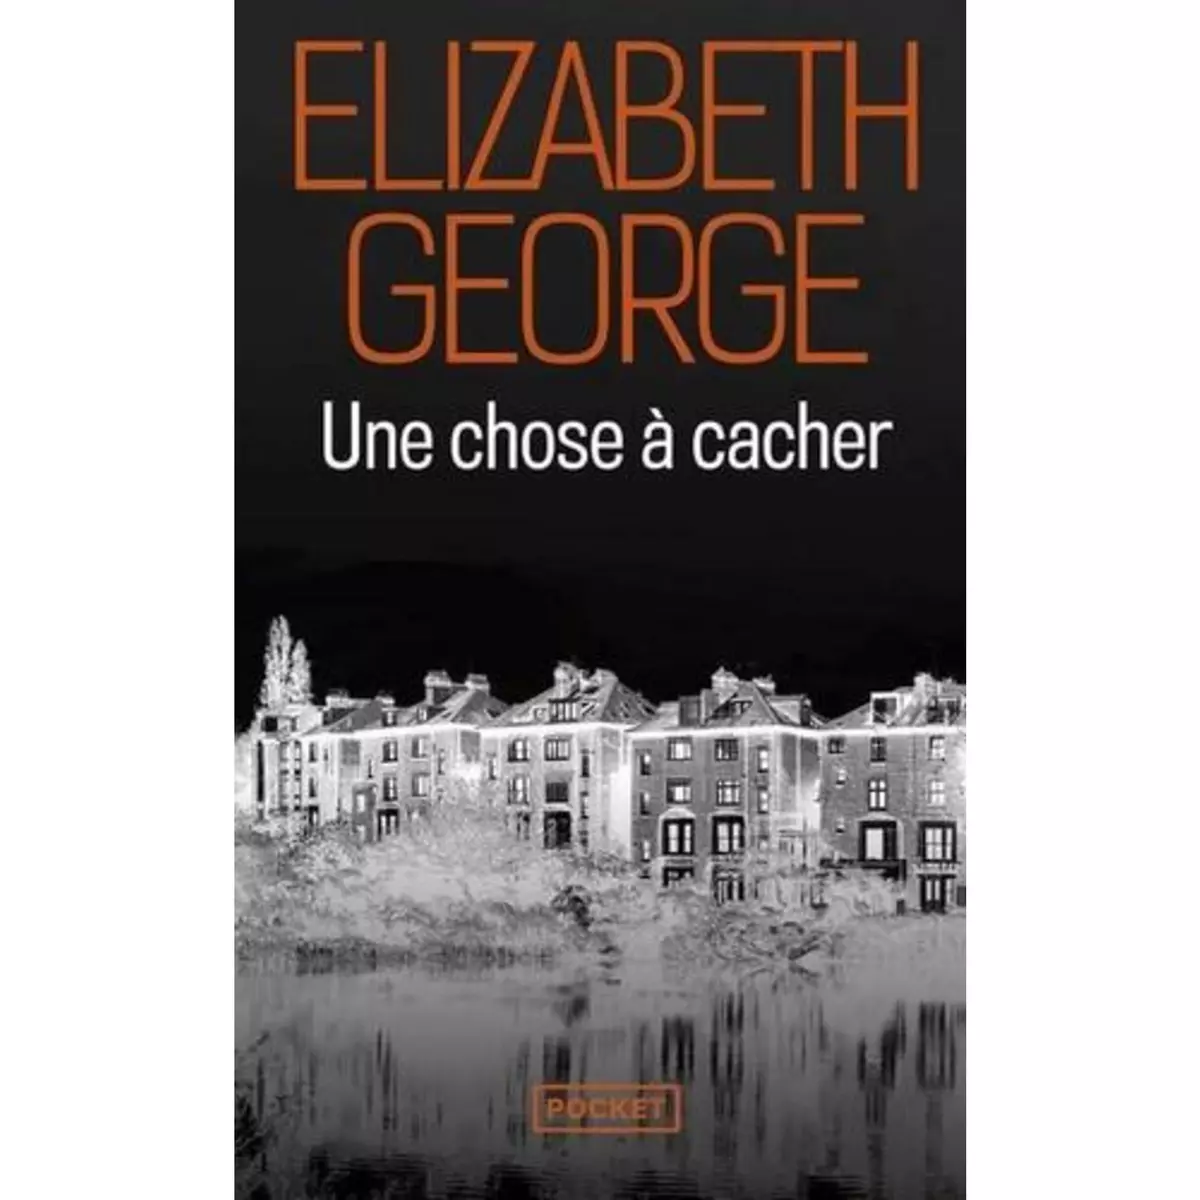  UNE CHOSE A CACHER, George Elizabeth